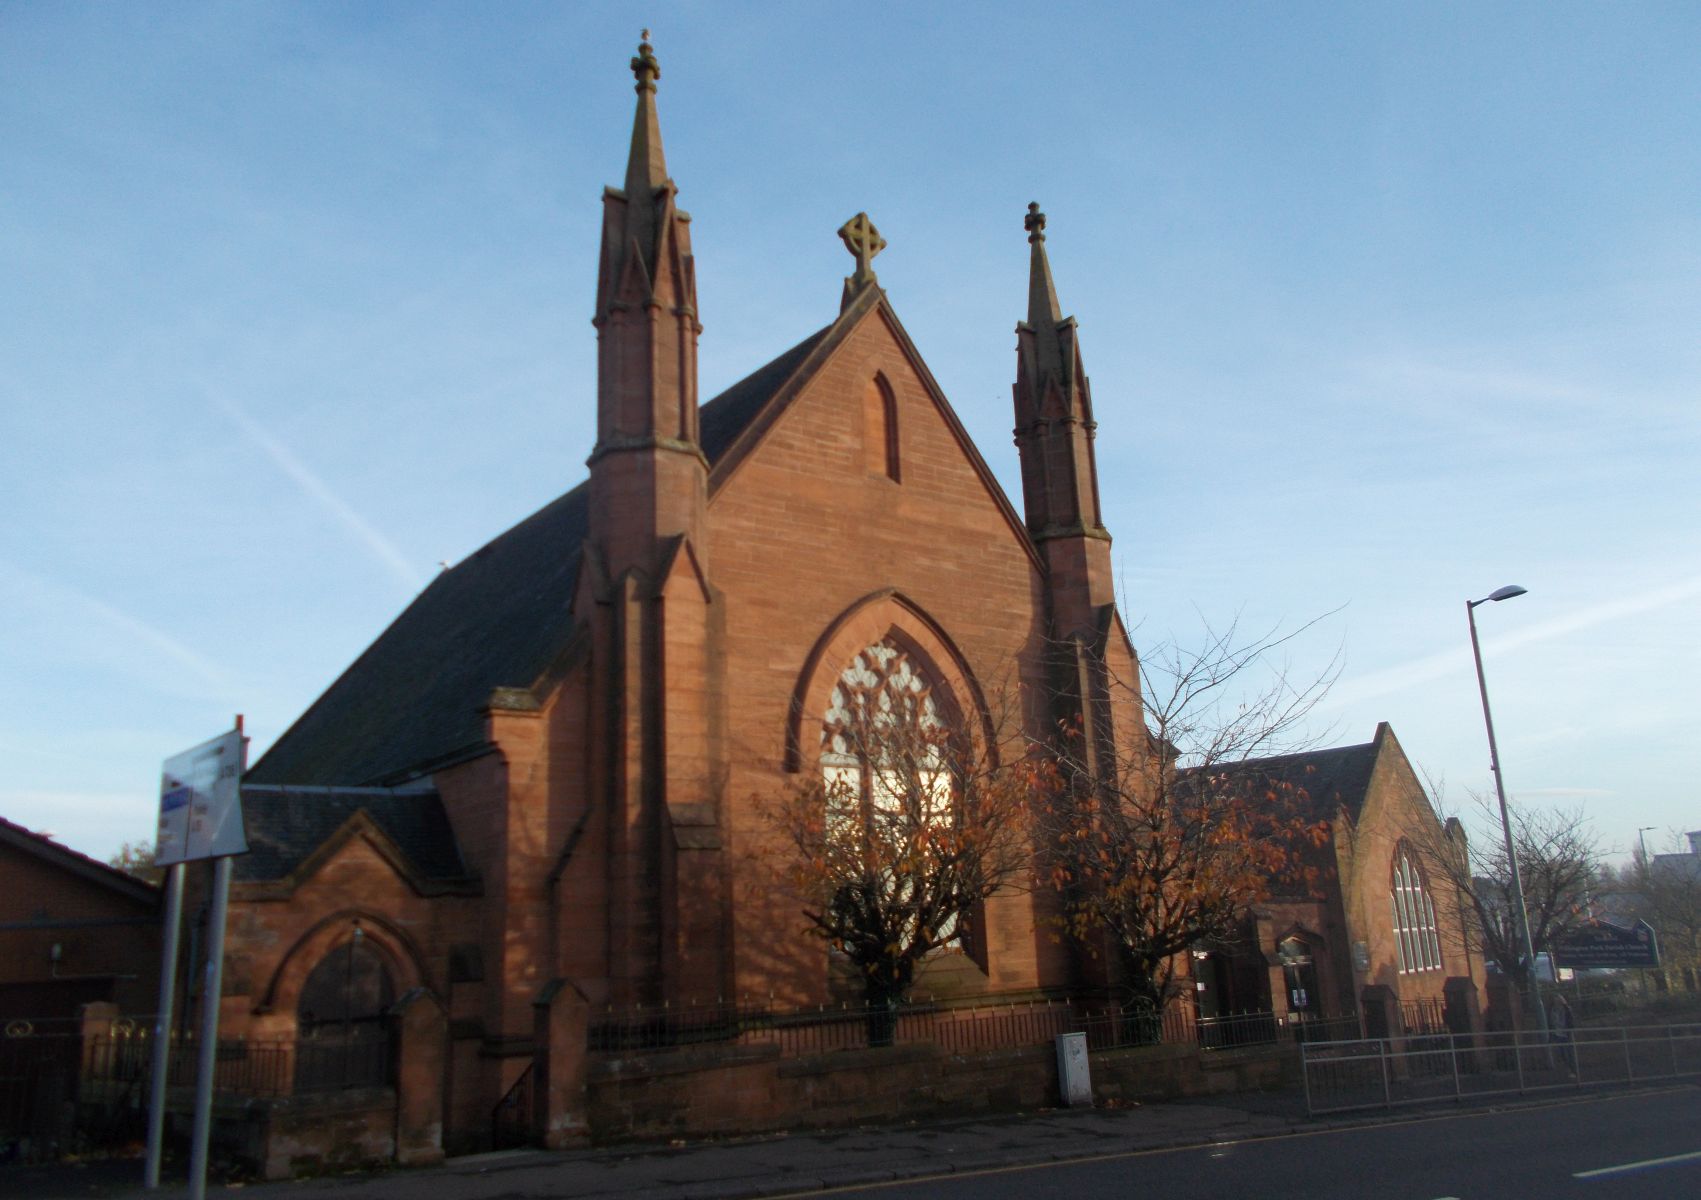 Hillington Church in Clydebank